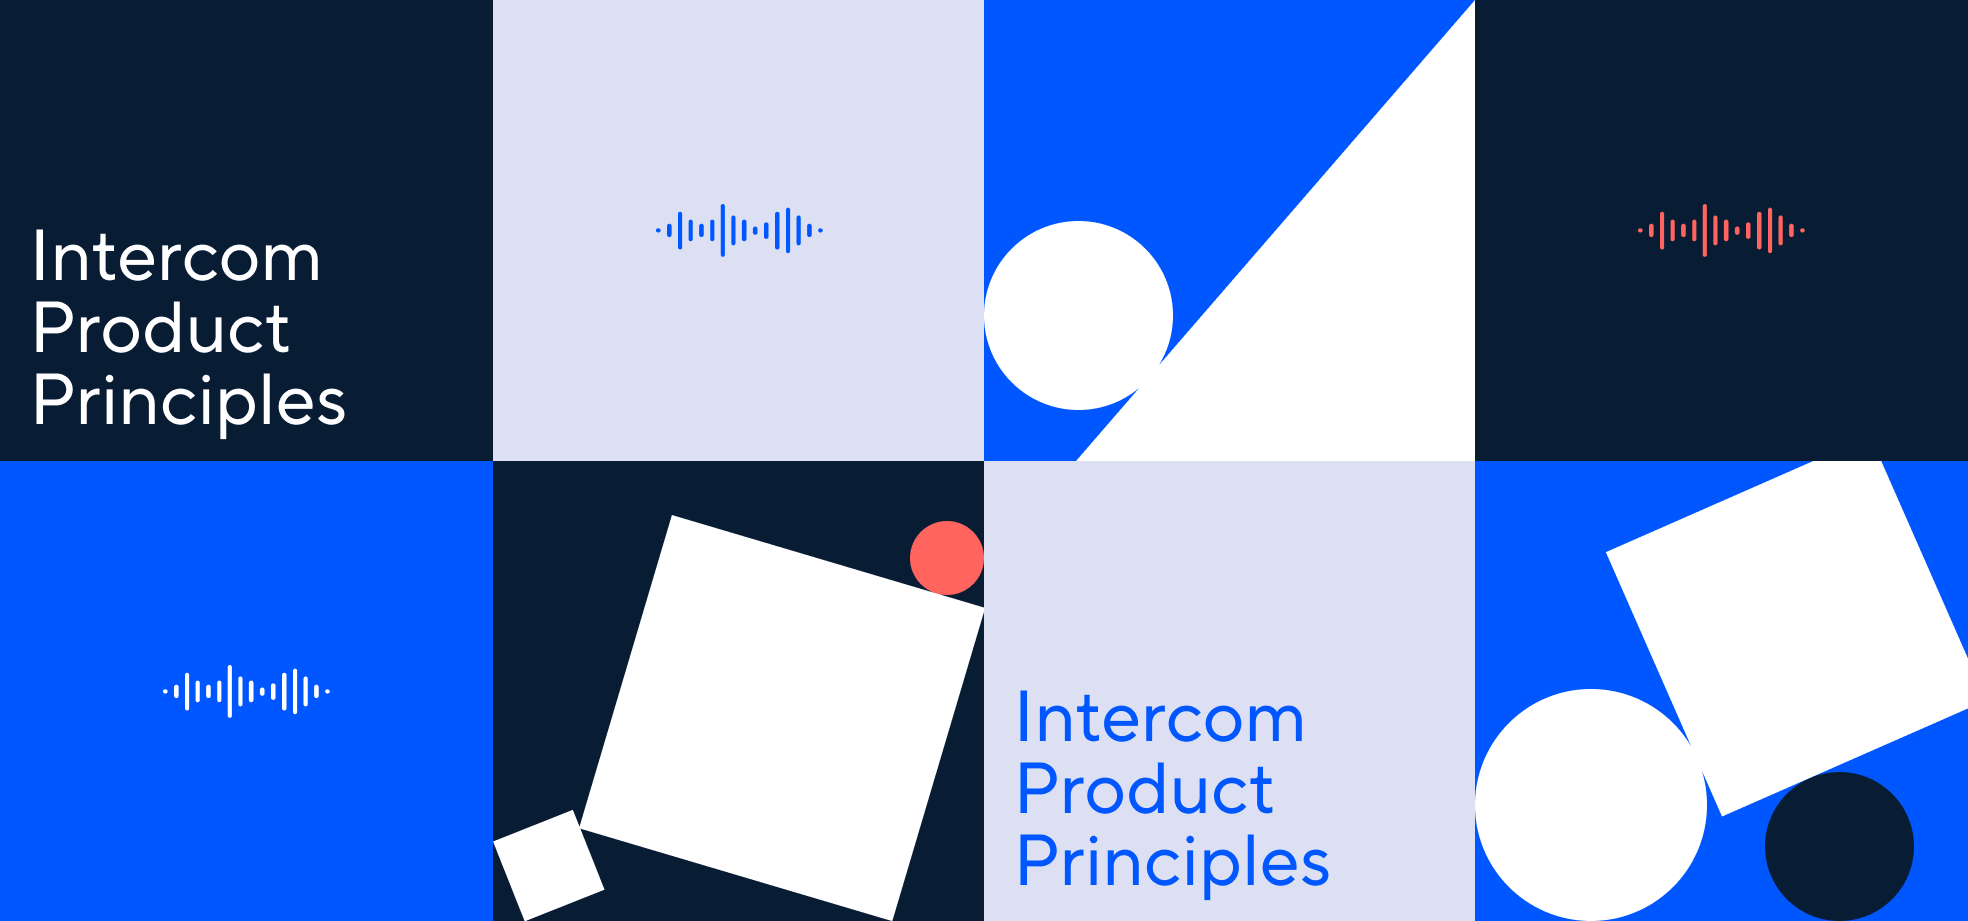 Intercom’s product principles: Back to the basics